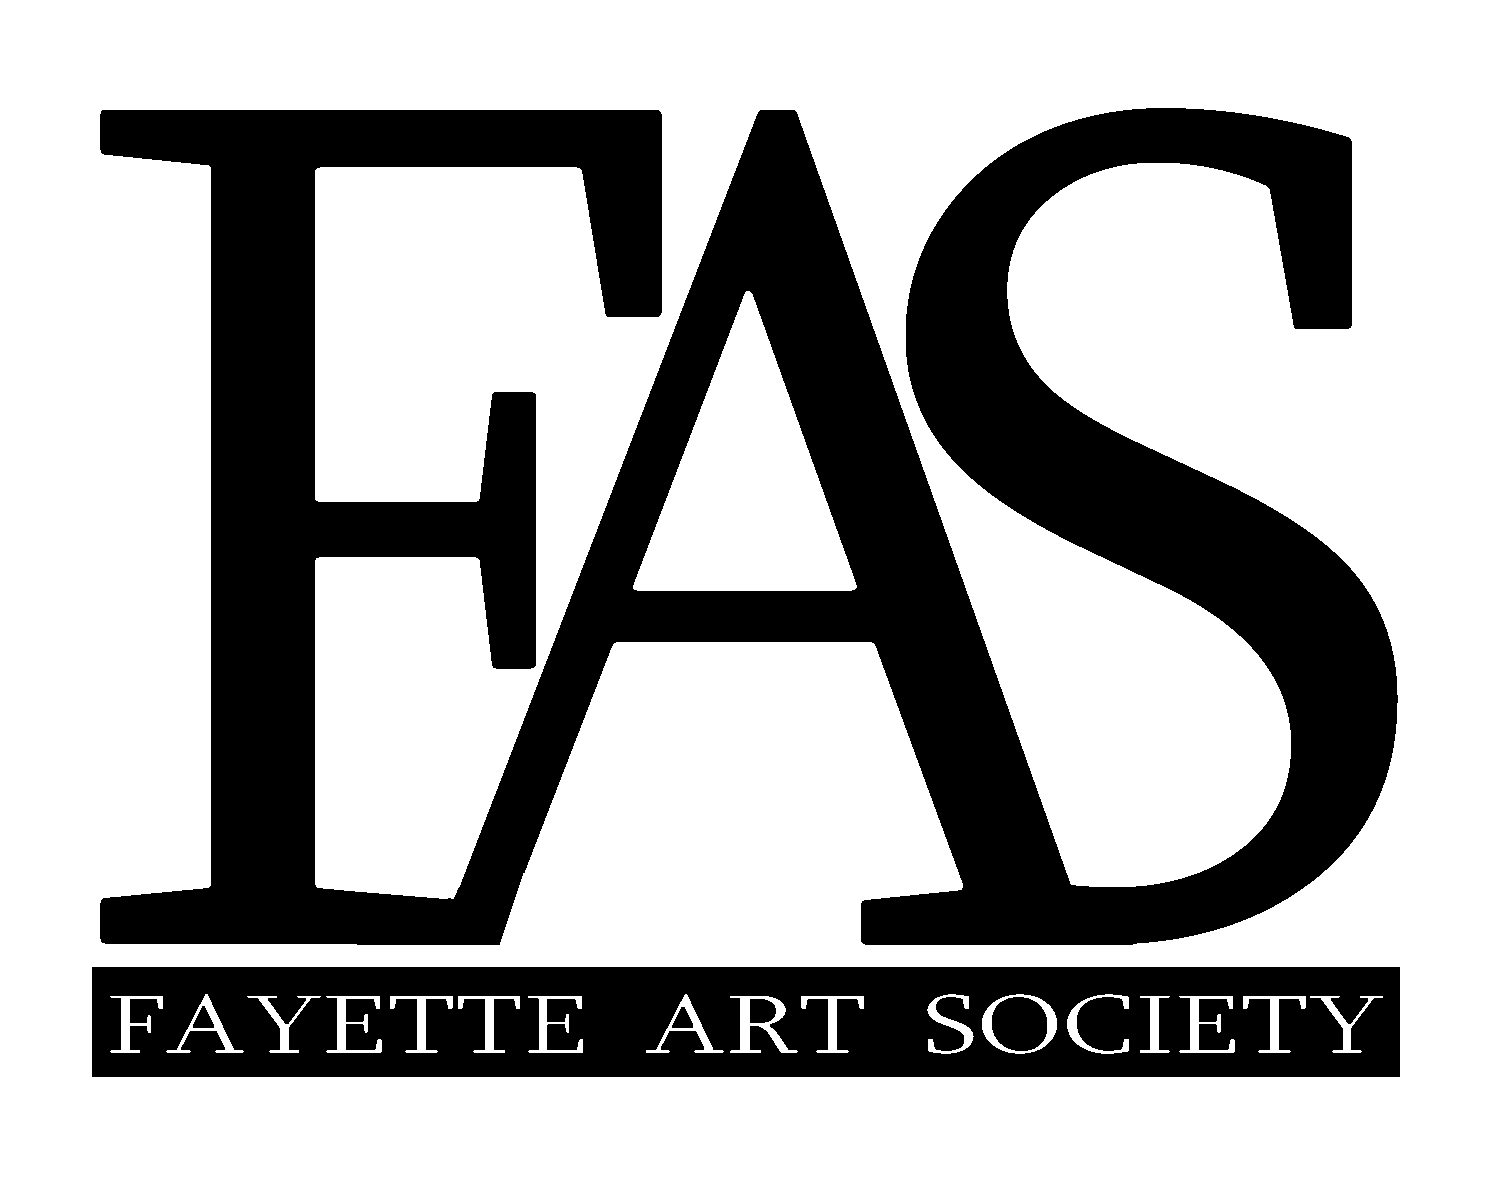 Fayette Art Society